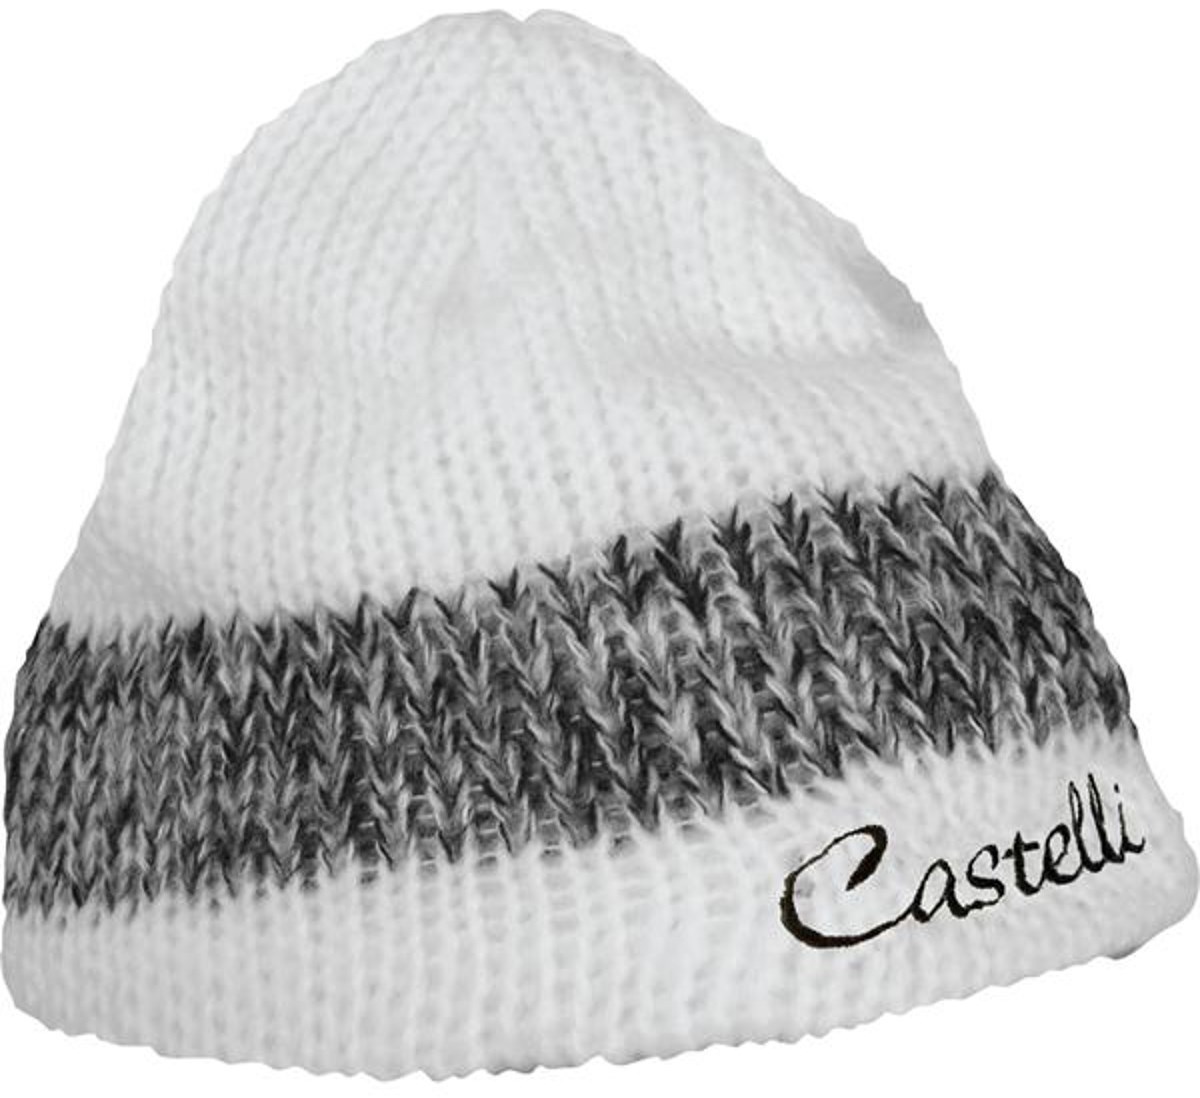 Castelli Bella Knit Womens Beanie Hat product image